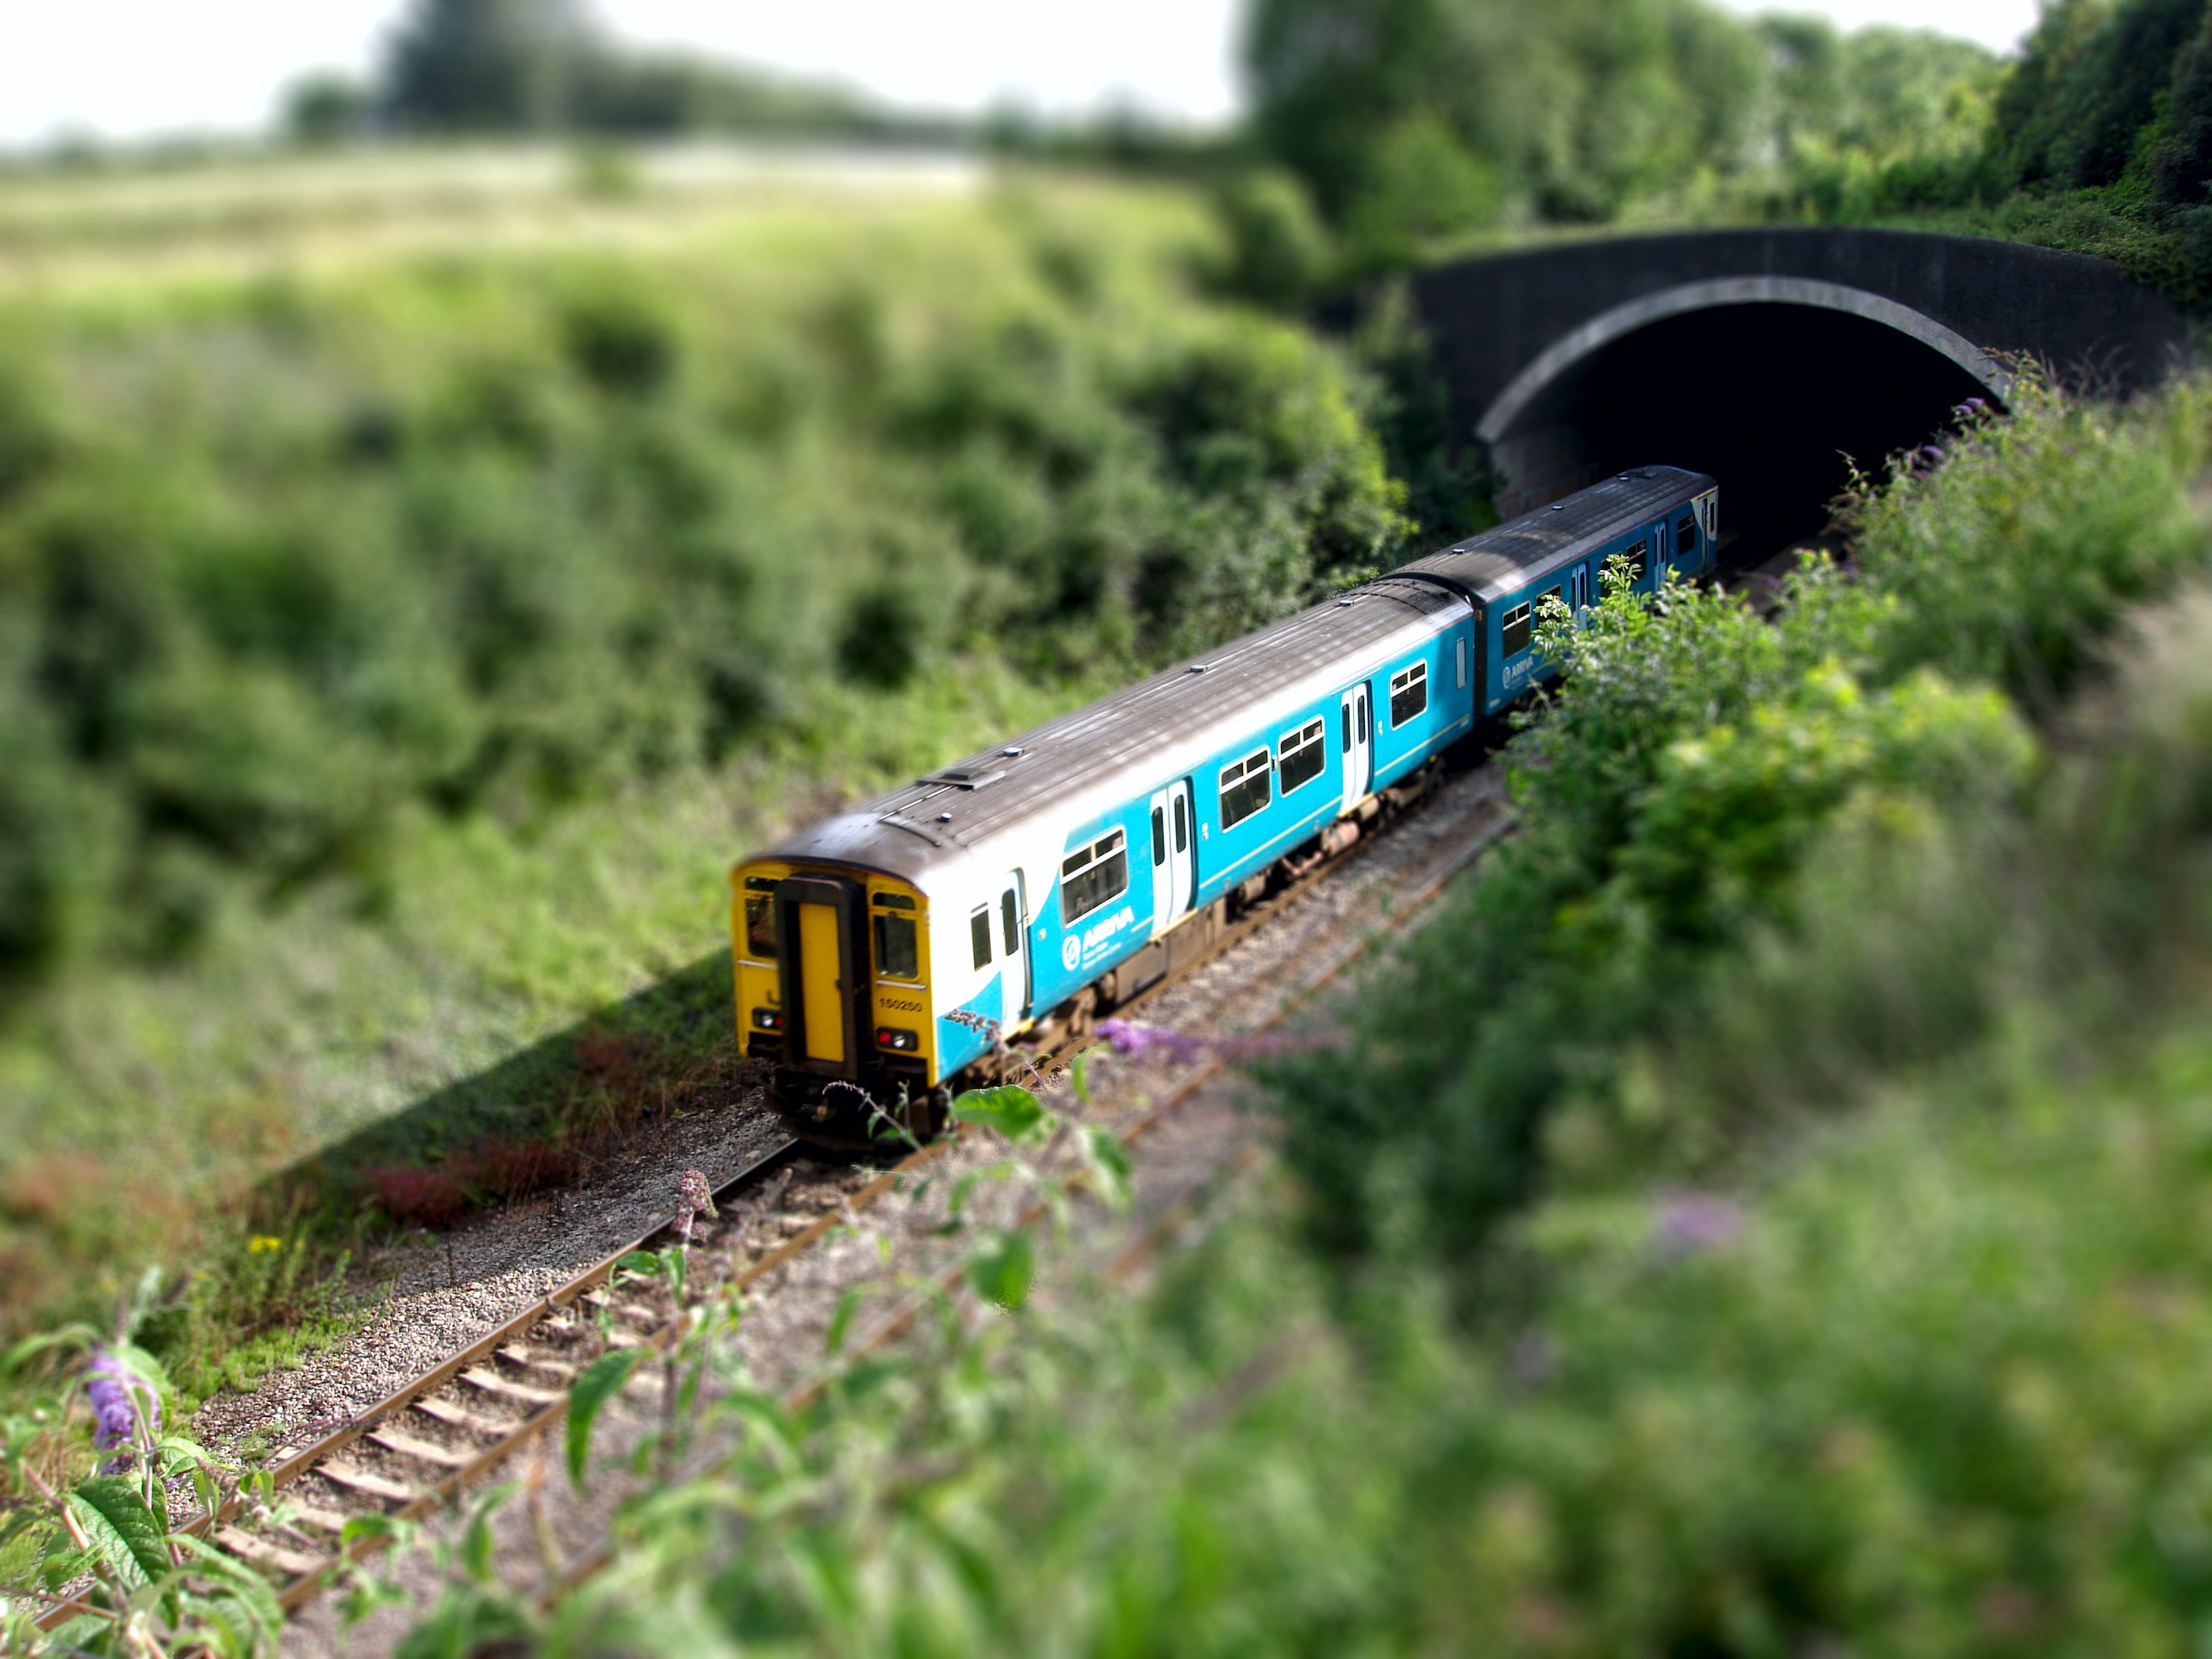 General 3264x2448 train tilt shift railway tunnel wildlife crossings vehicle